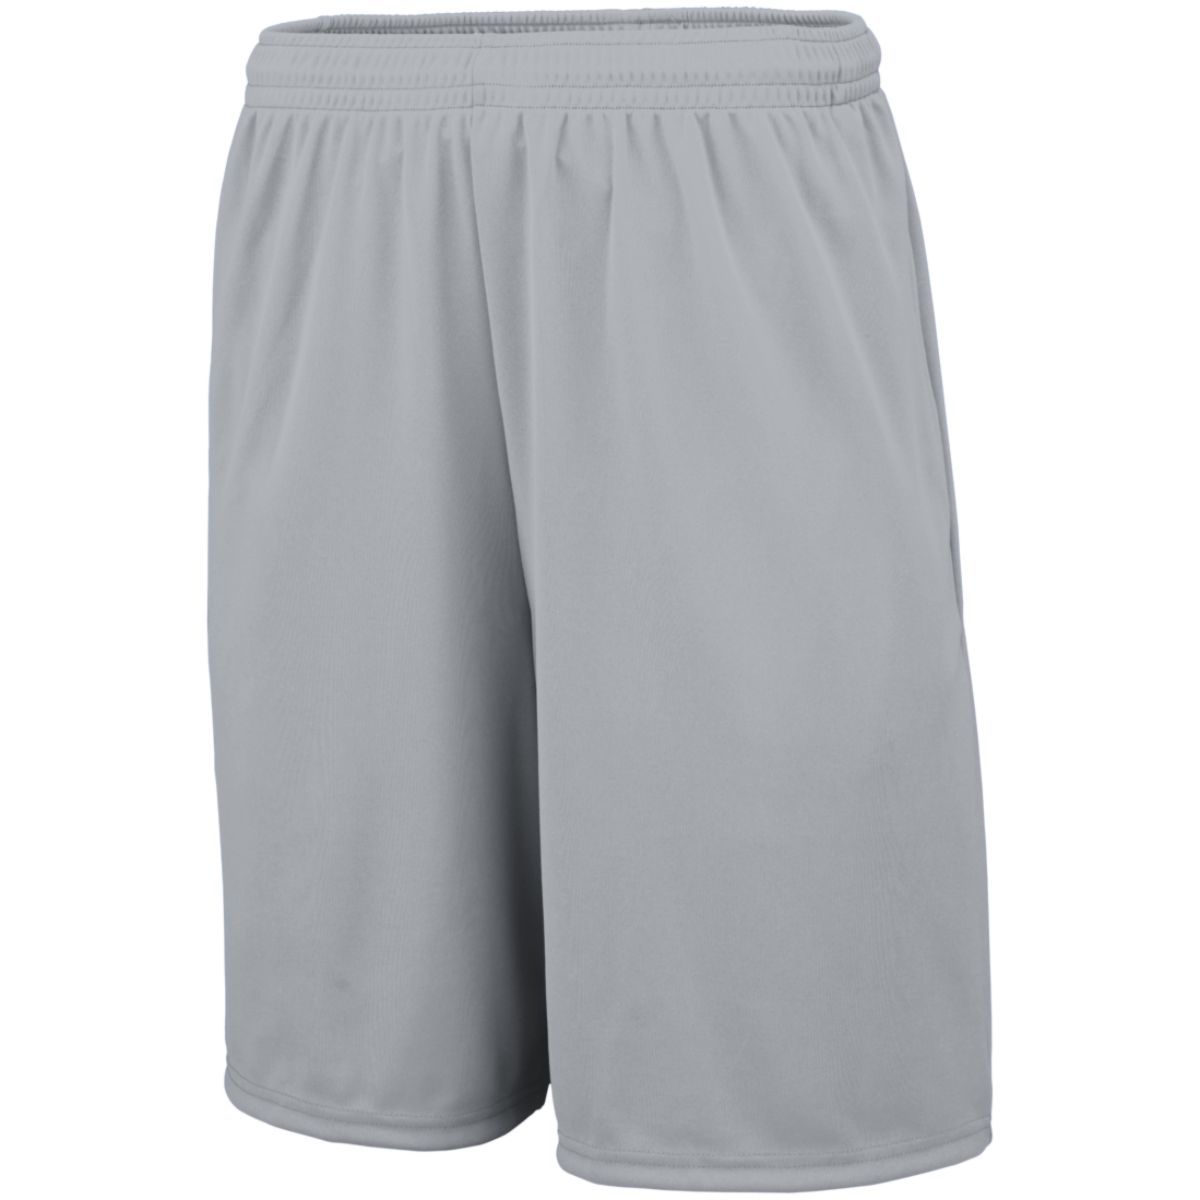 Custom Athletic Knit Pro Basketball Shorts Solid Side Stripe - Coastal Reign